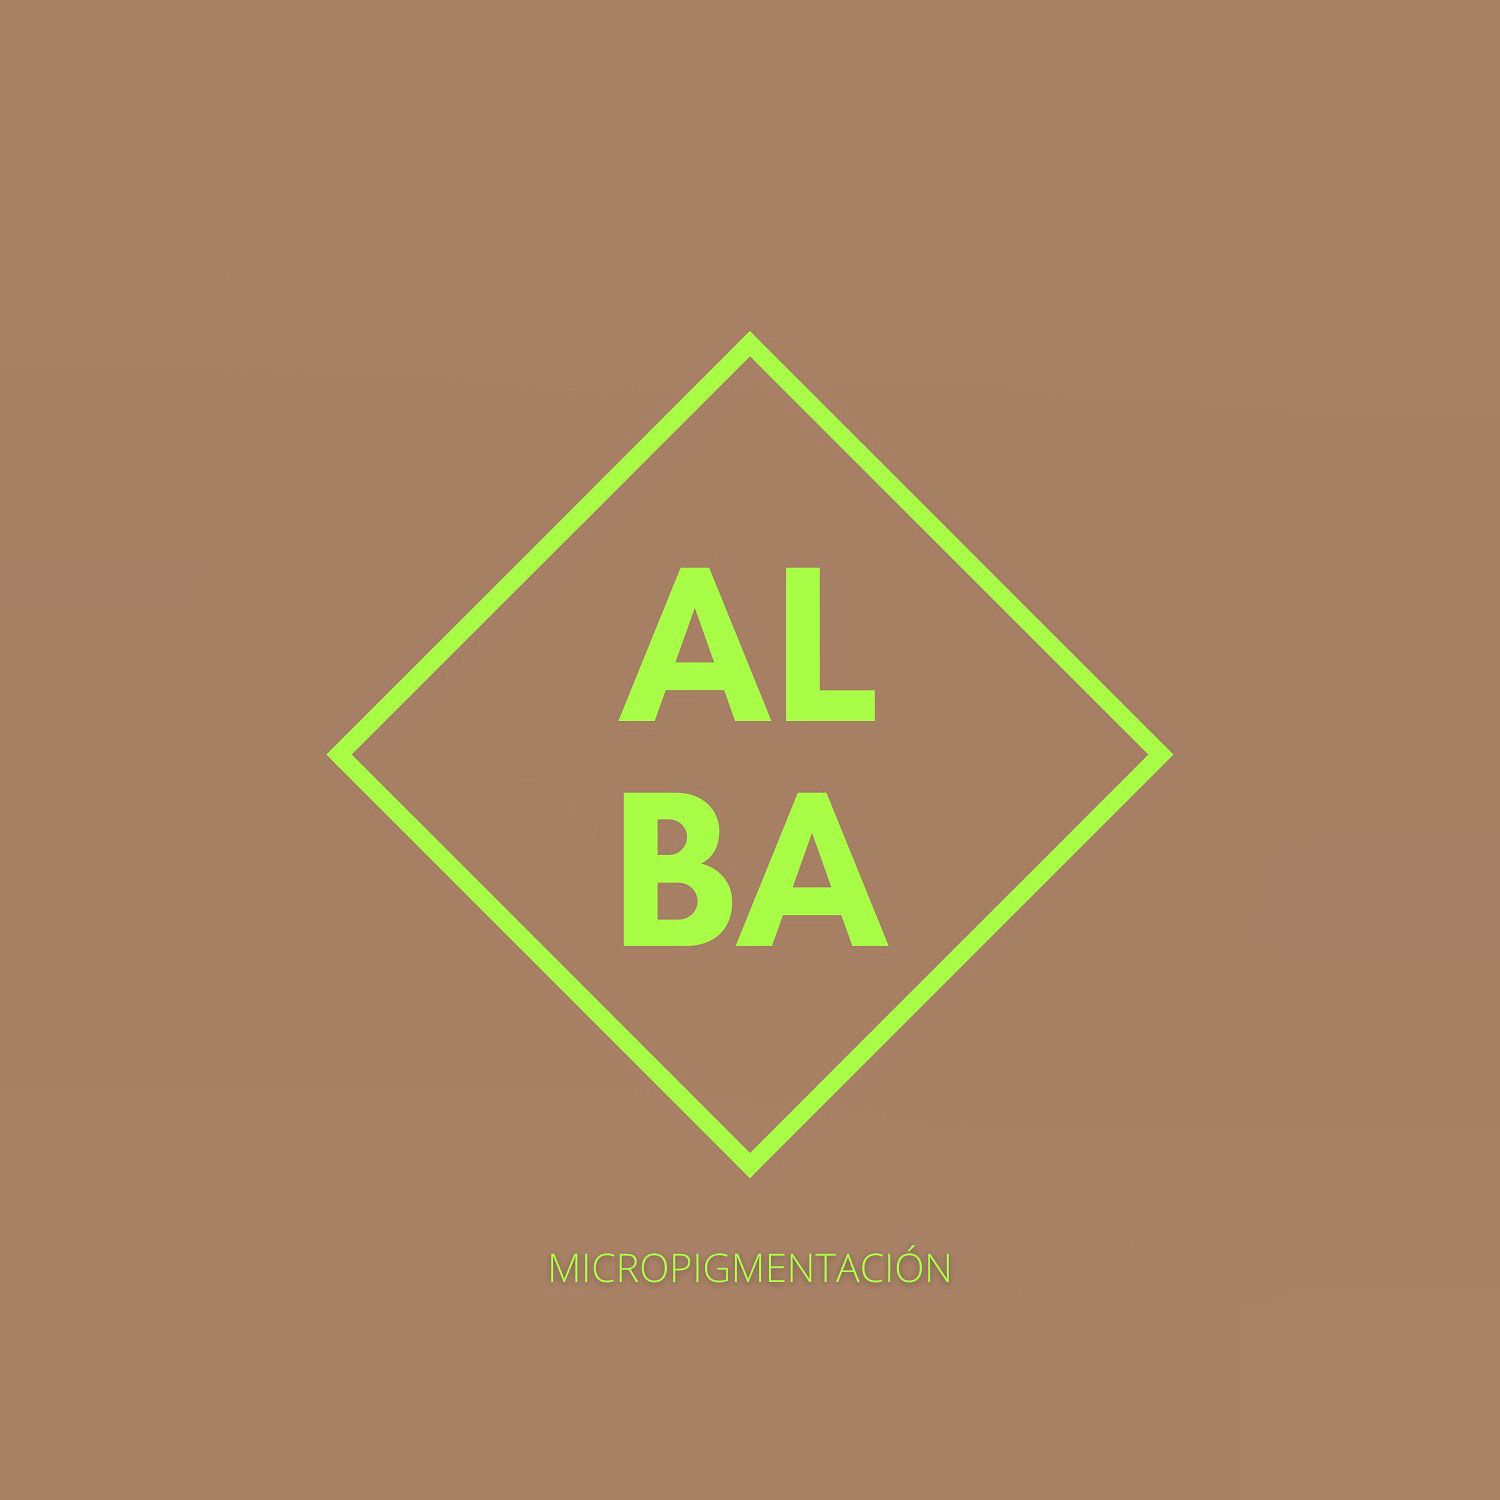 Alba Franco Micropigmentacion en Sevilla. Logo